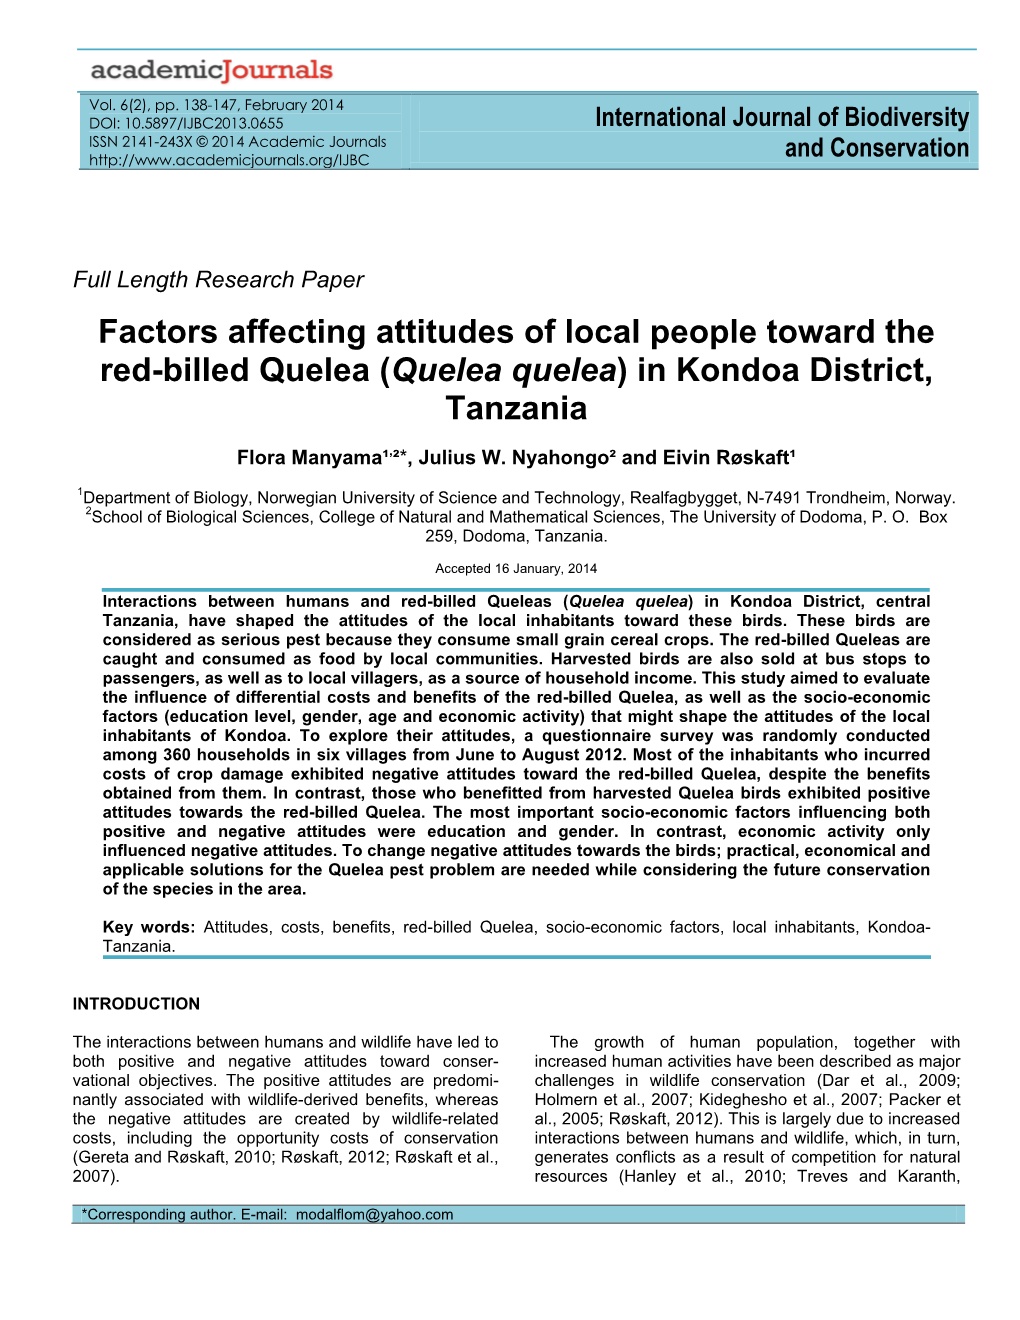 Factors Affecting Attitudes of Local People Toward the Red-Billed Quelea (Quelea Quelea) in Kondoa District, Tanzania